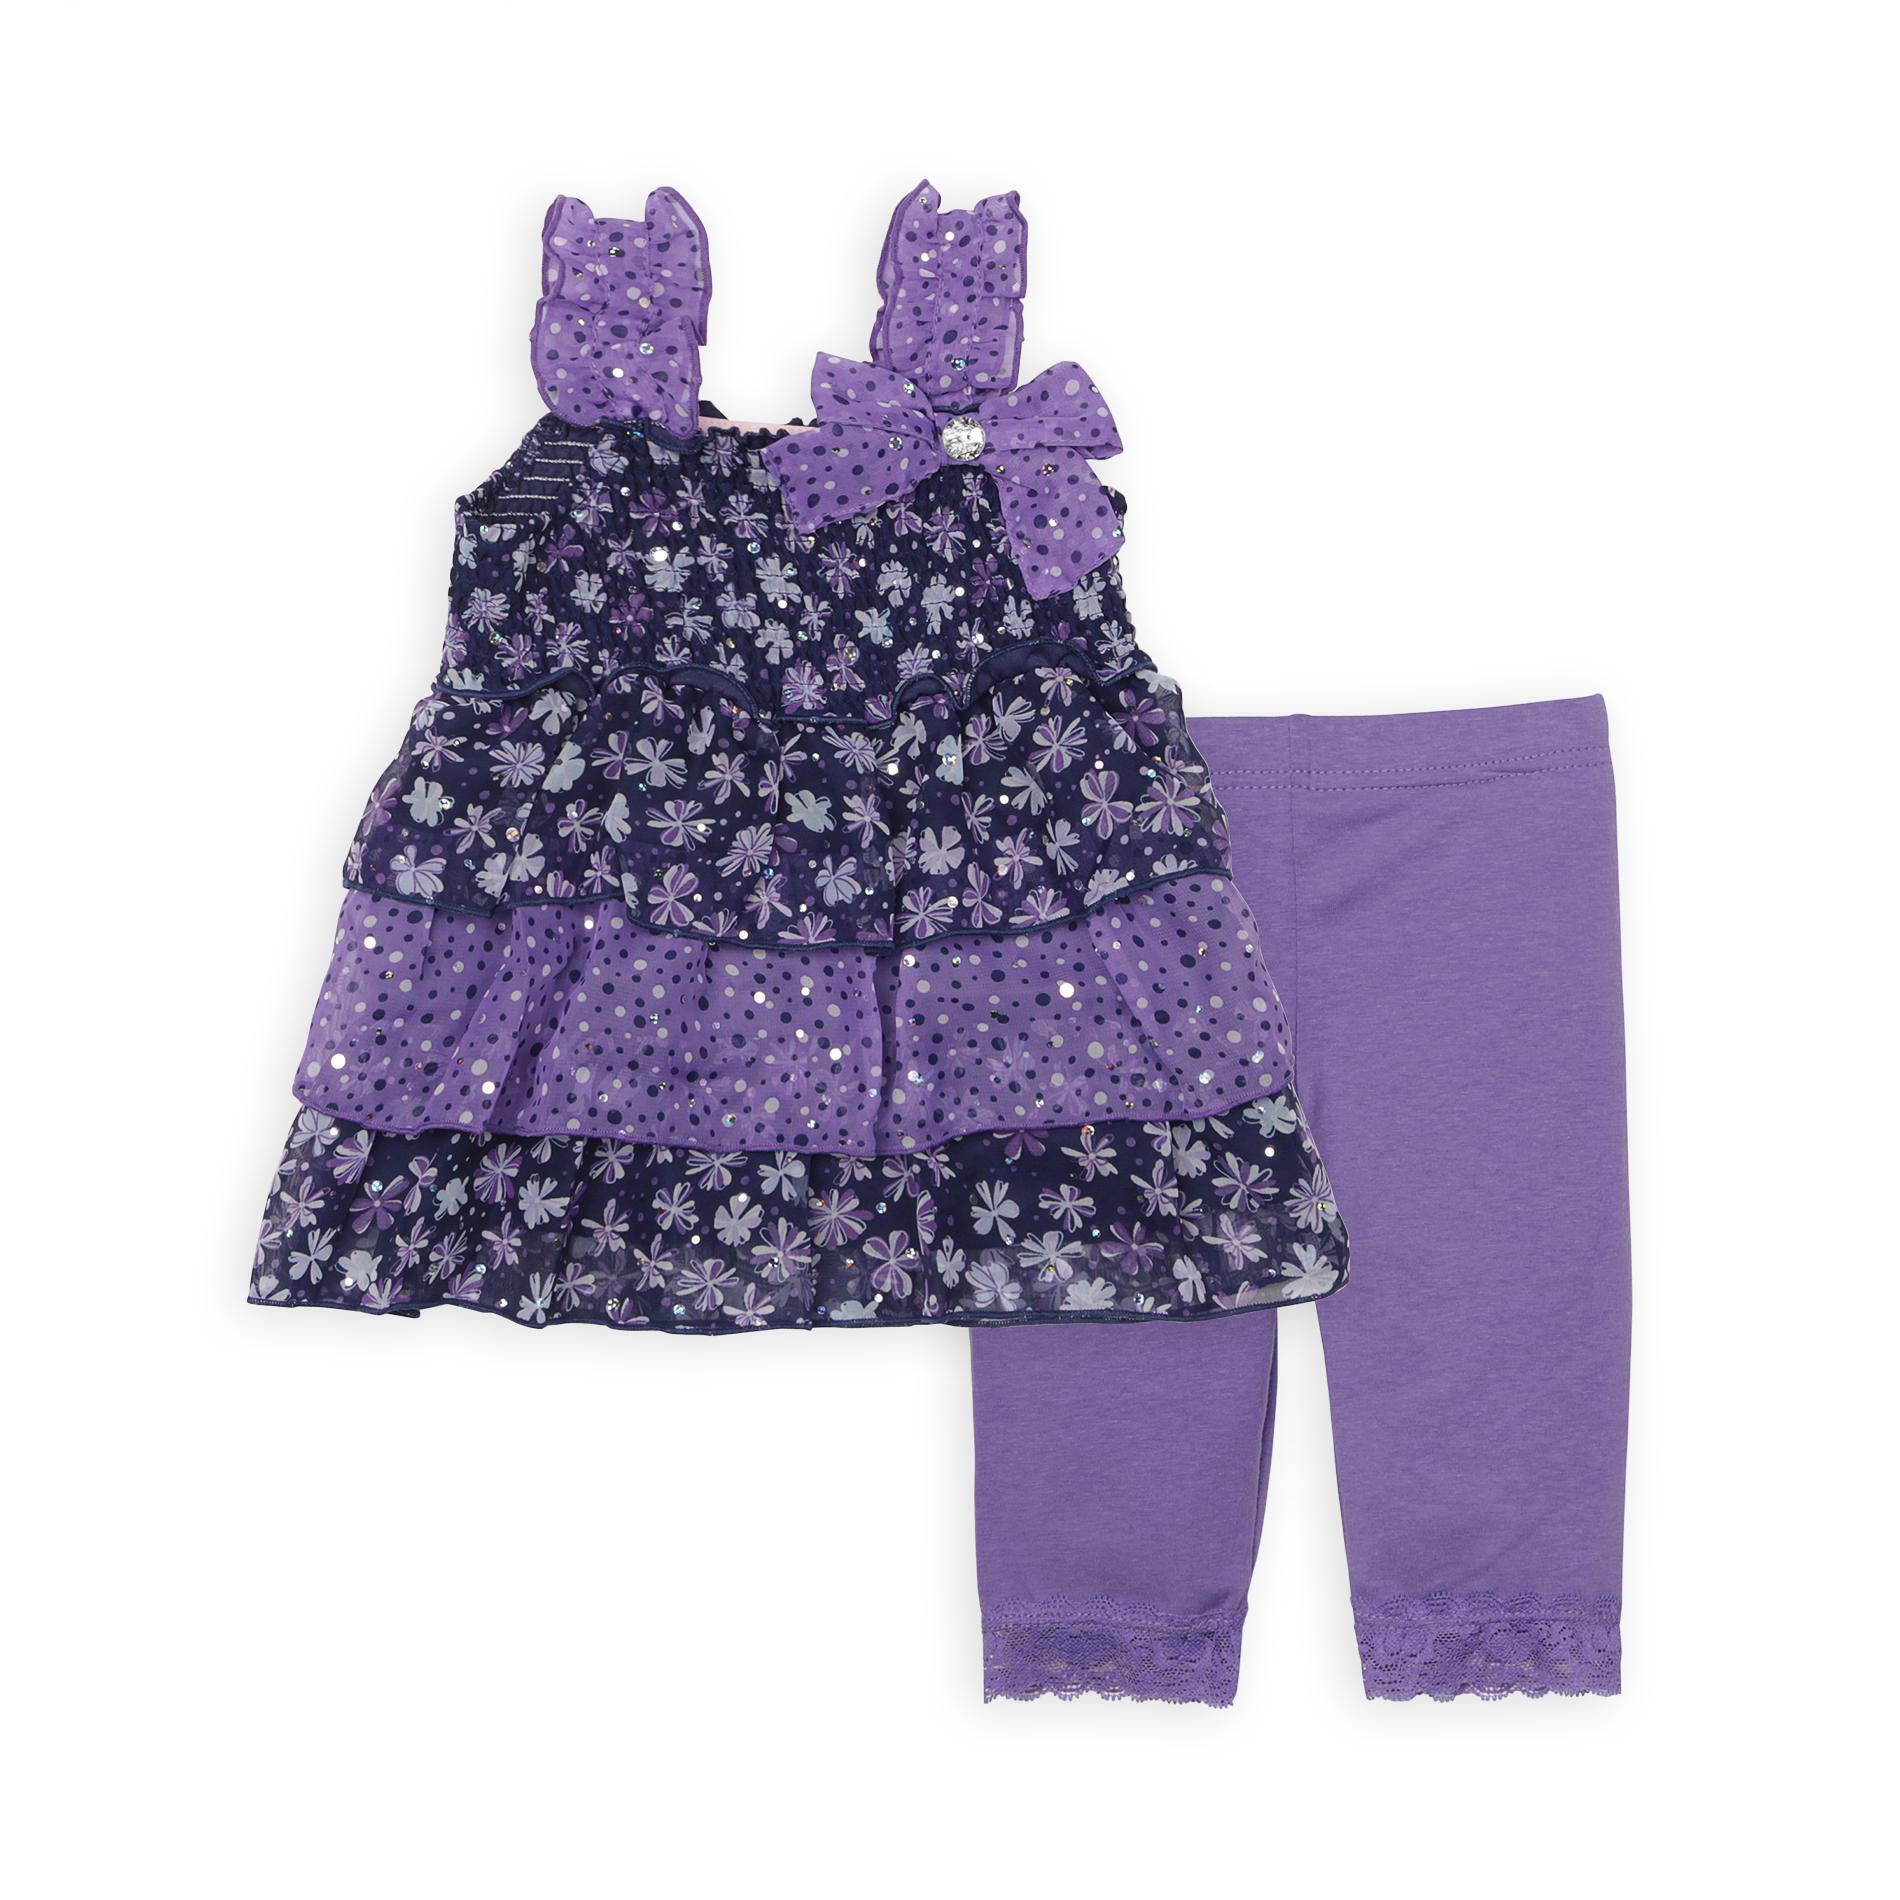 Little Lass Infant & Toddler Girl's Tunic Top & Leggings - Floral